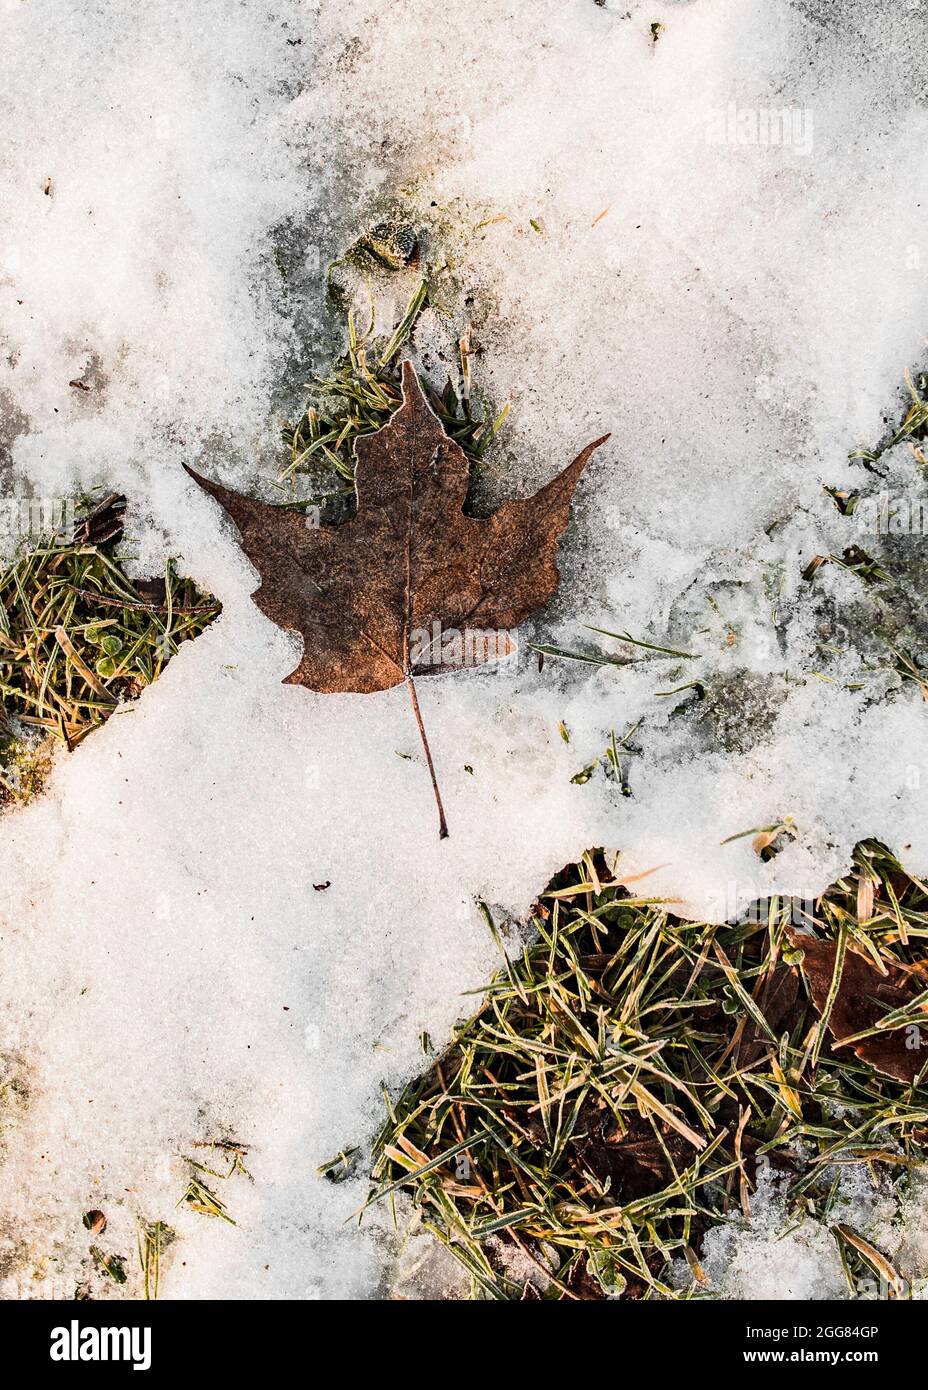 Leaf on snowy ground Stock Photo